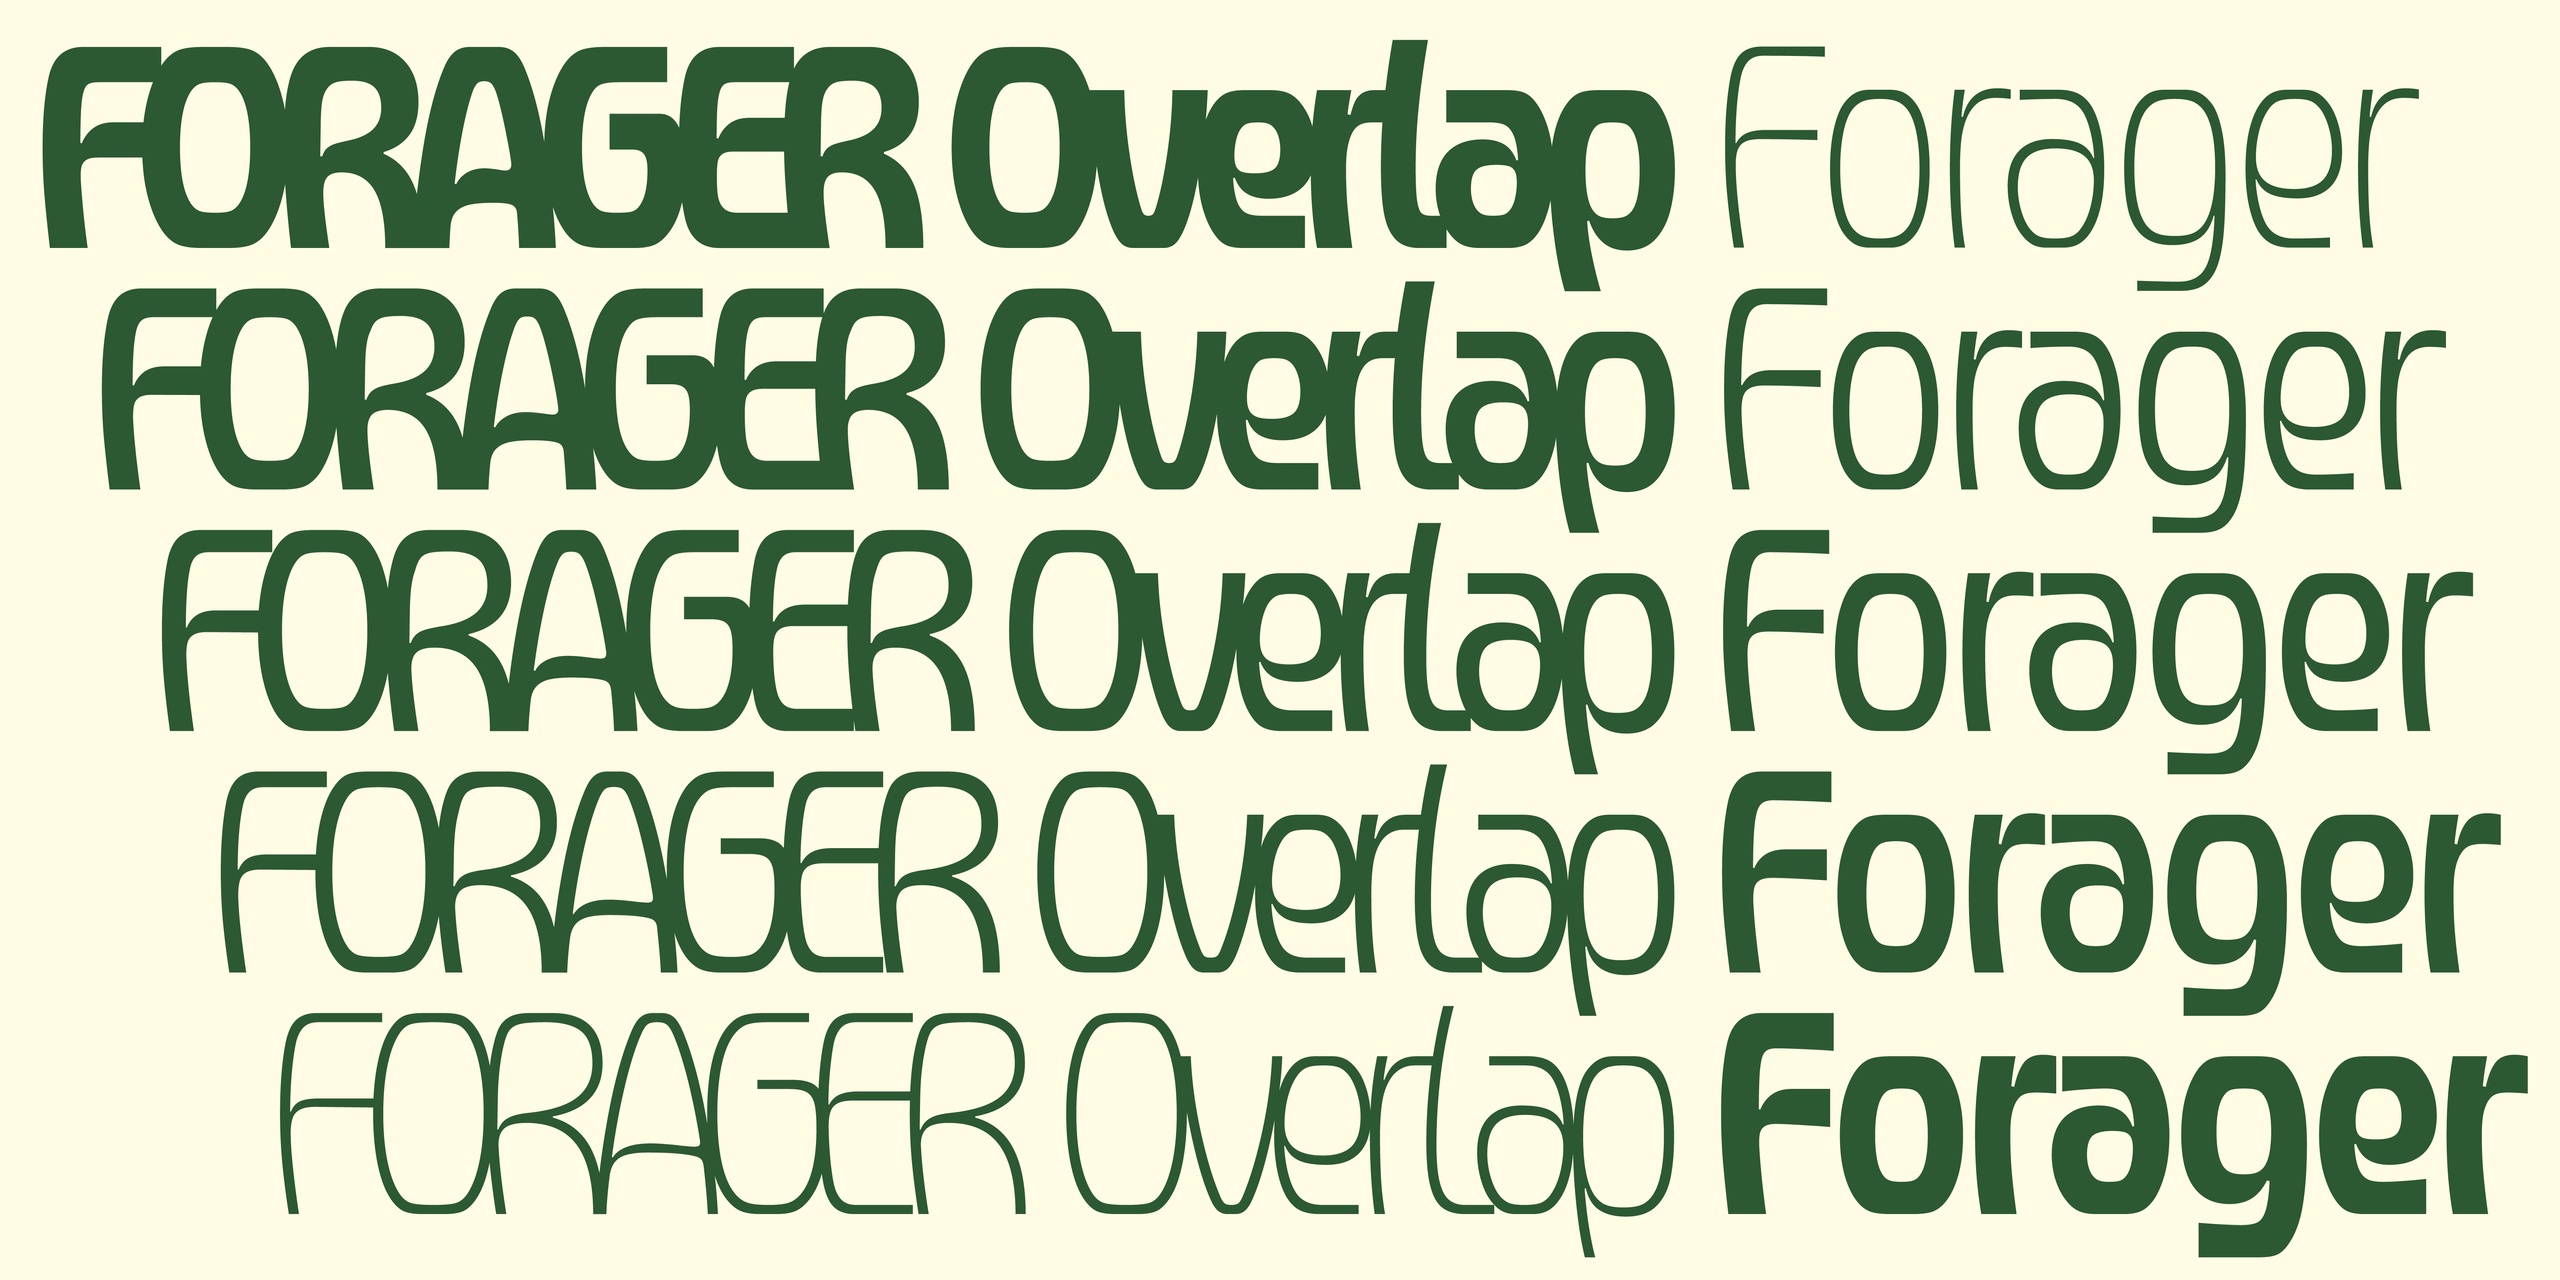 Пример шрифта Forager Thin Overlap